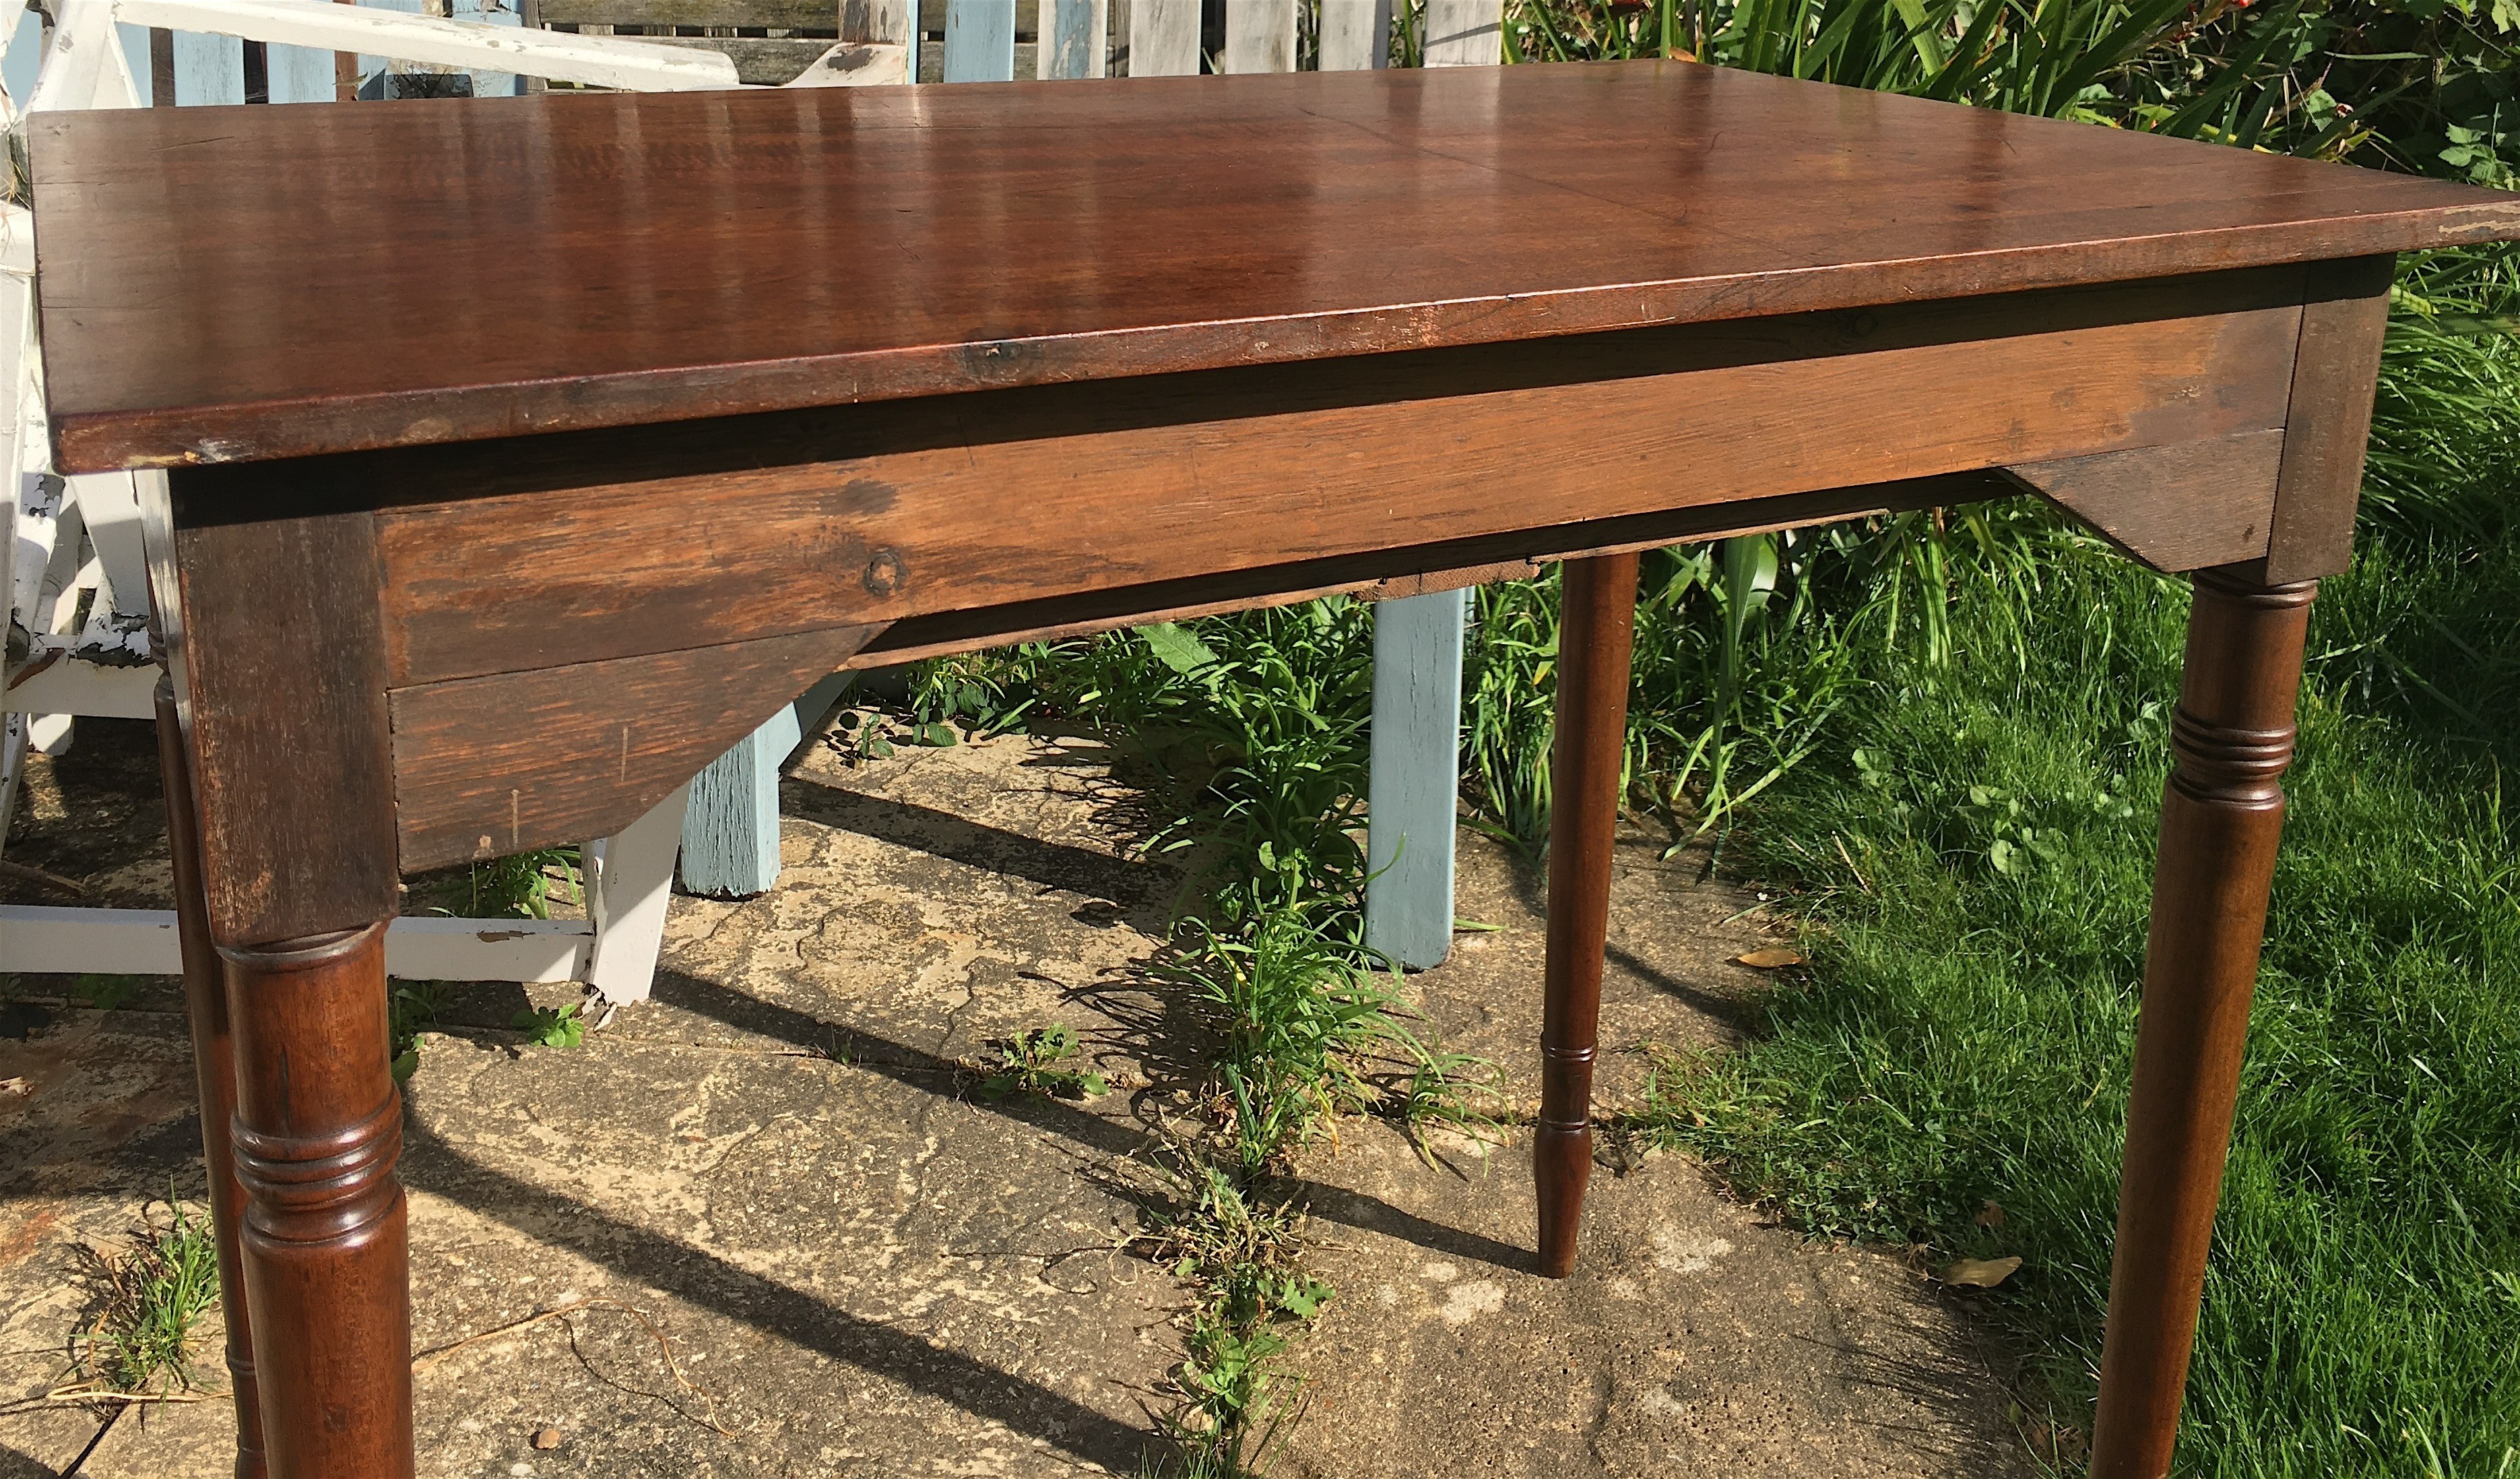 A Regency mahogany side table, width 84cm, depth 53cm, height 76cm